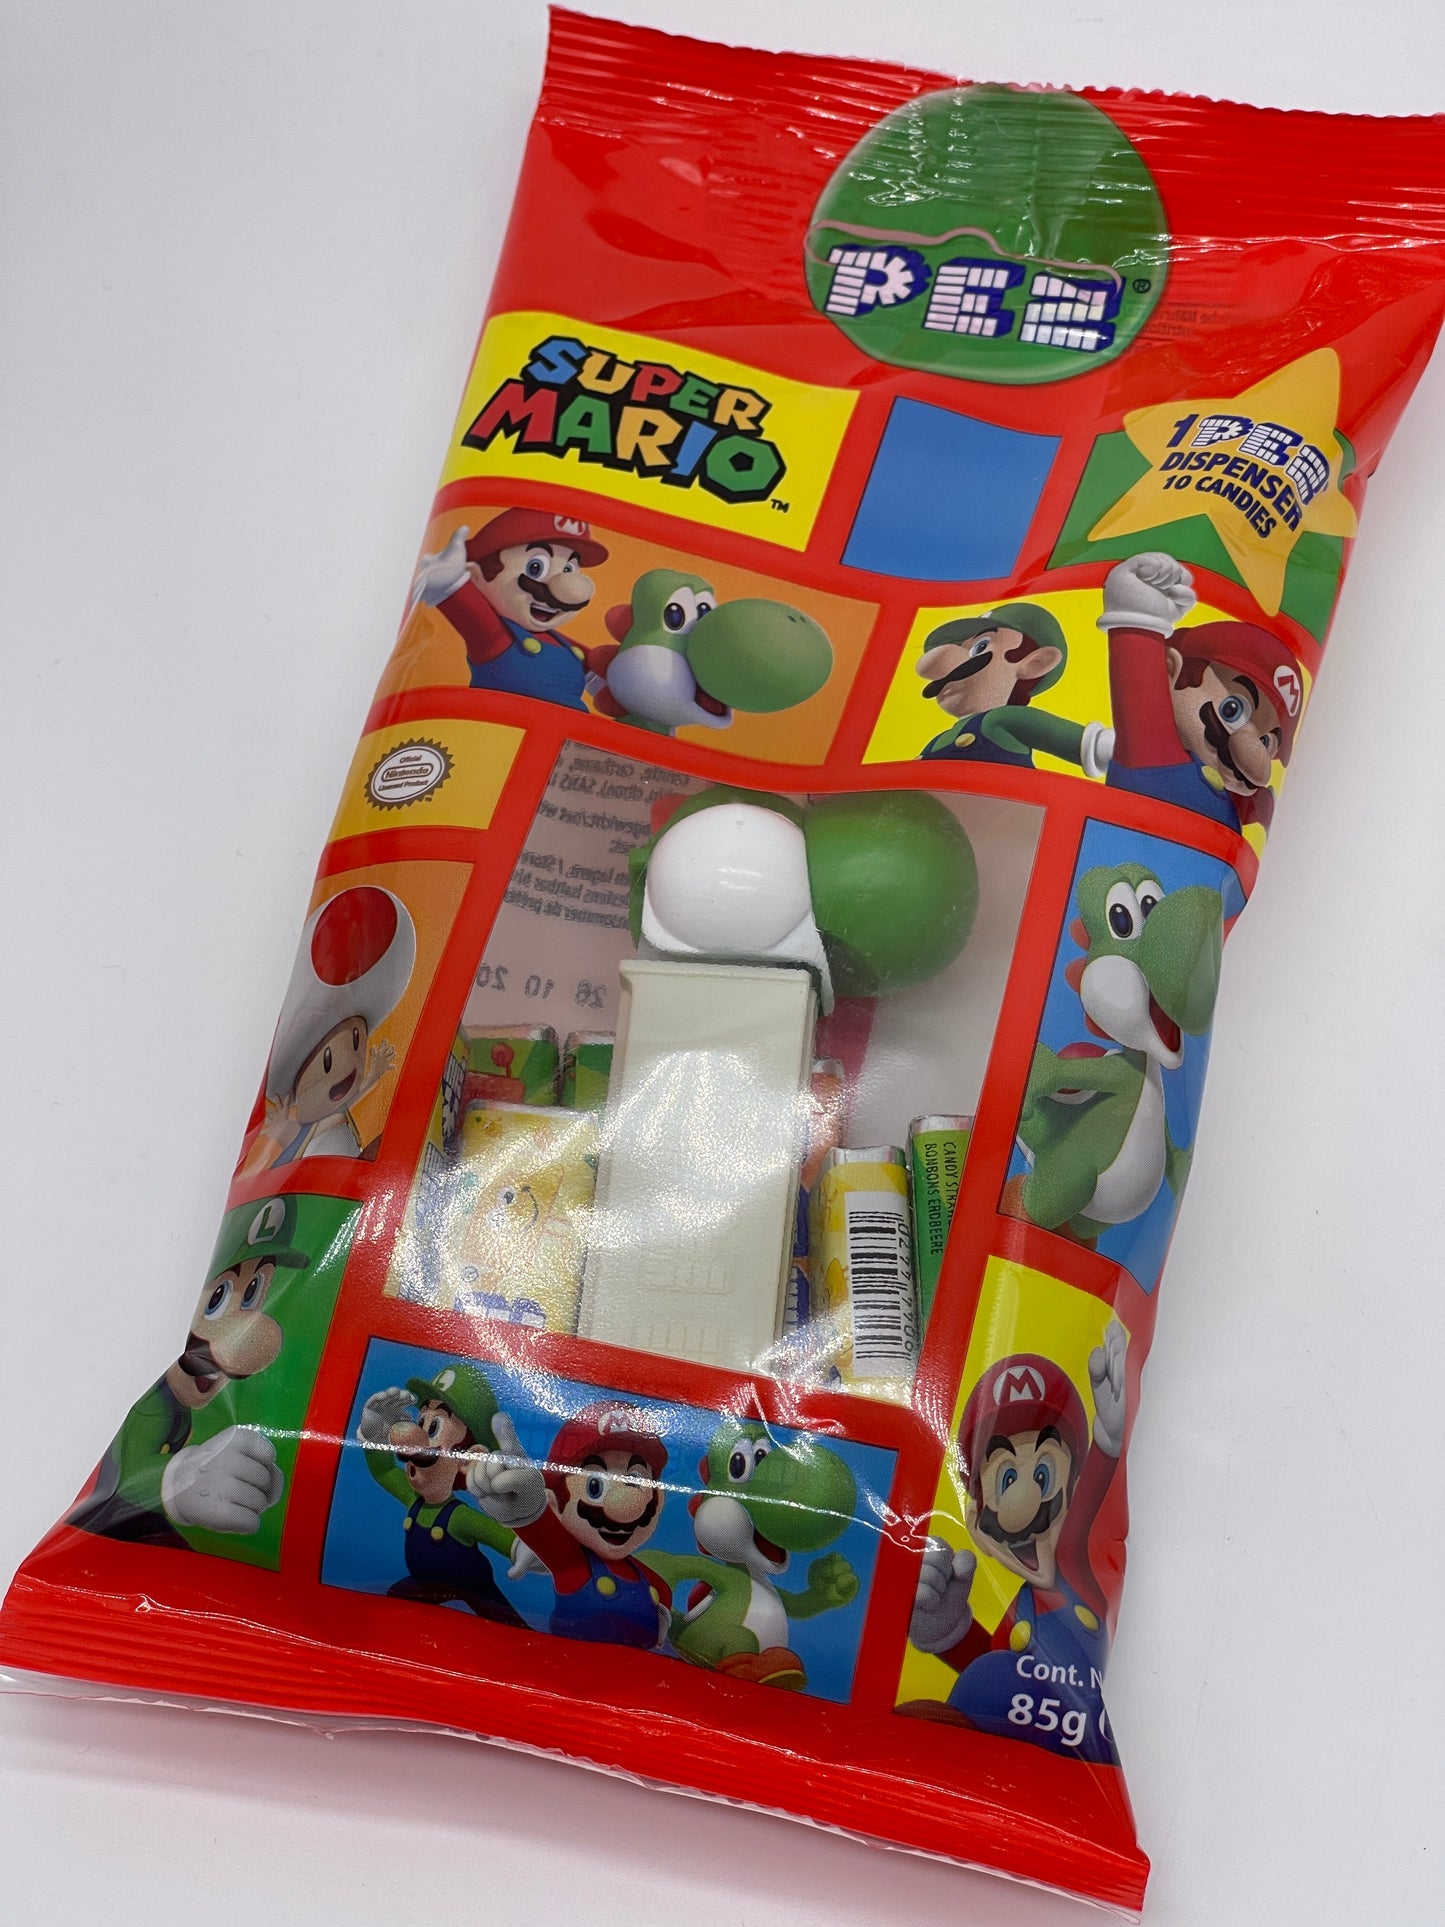 PEZ Super Mario Bros. "Mario, Yoshi, Toad" mit 10 Nachfüllpacks im Beutel